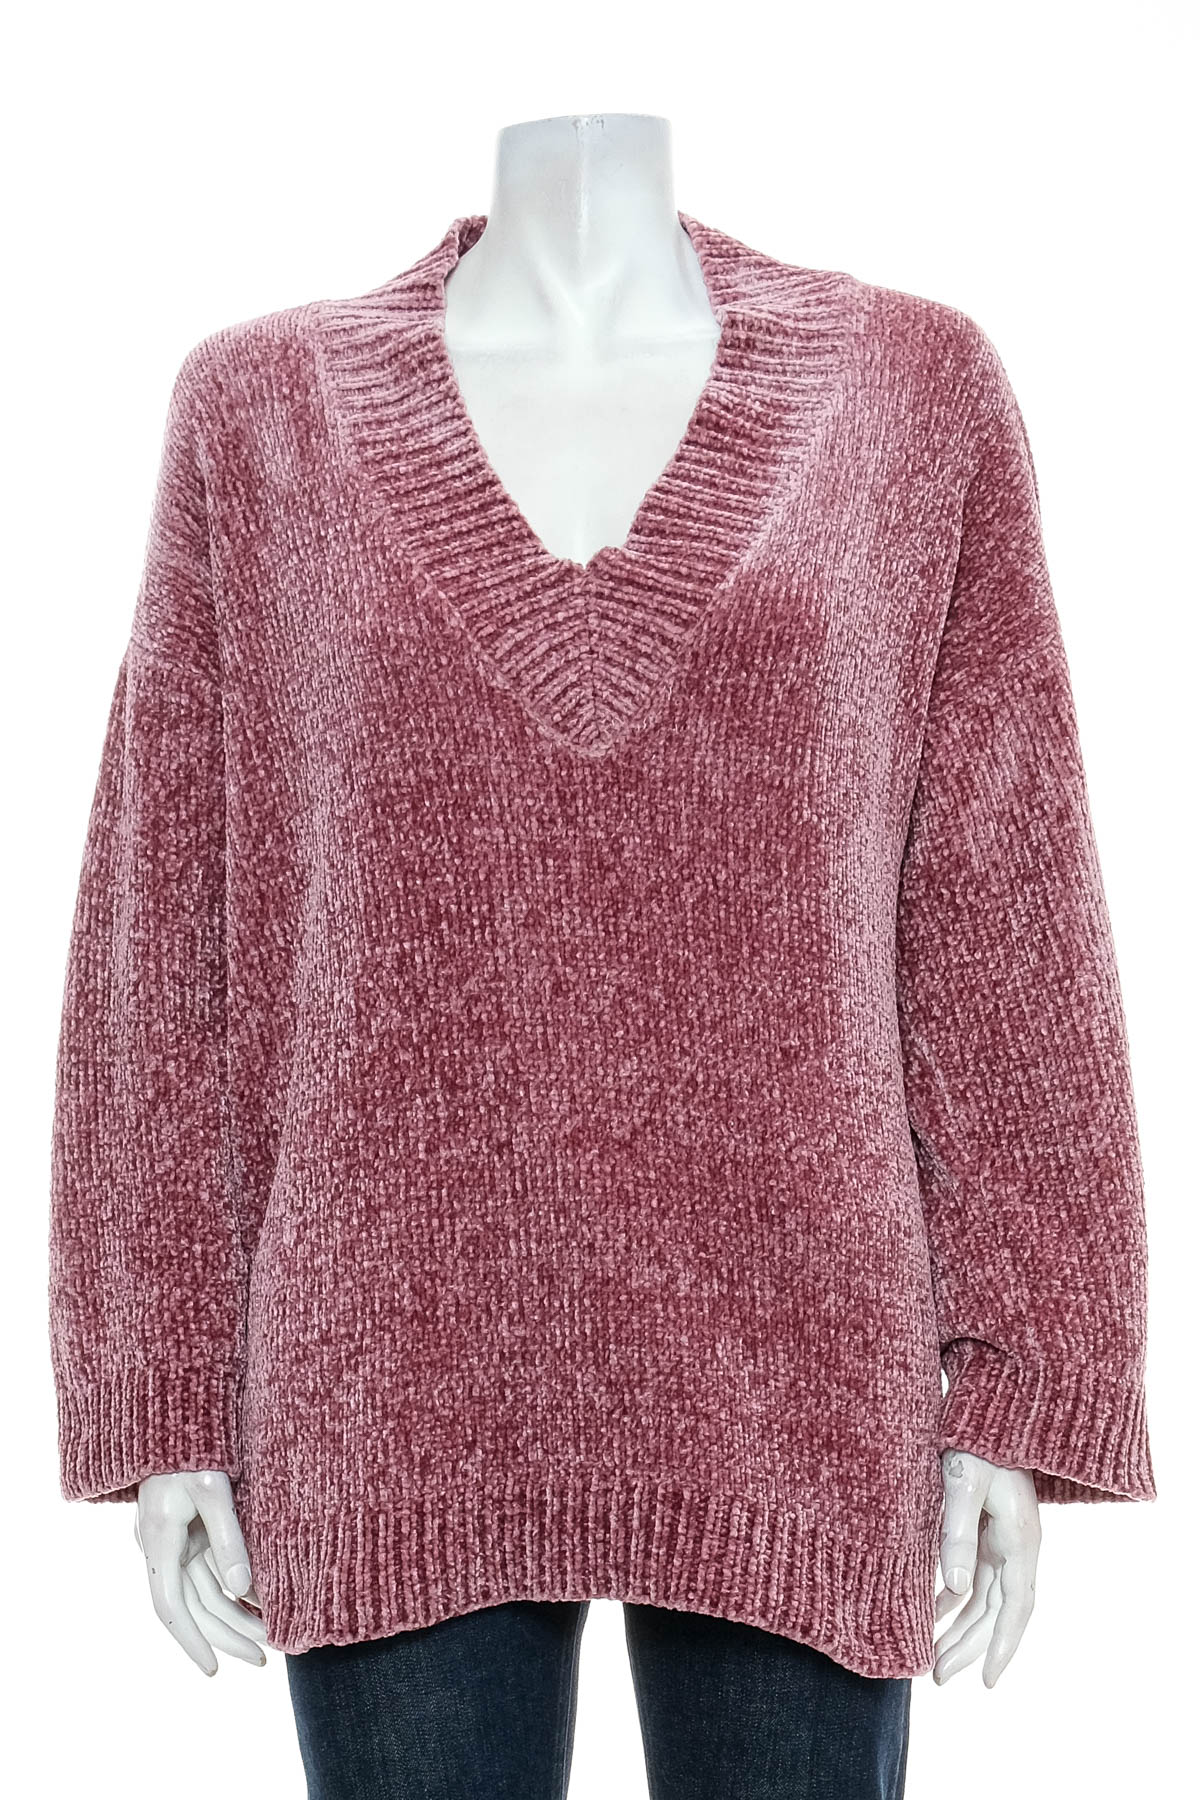 Women's sweater - MANGO BASICS - 0